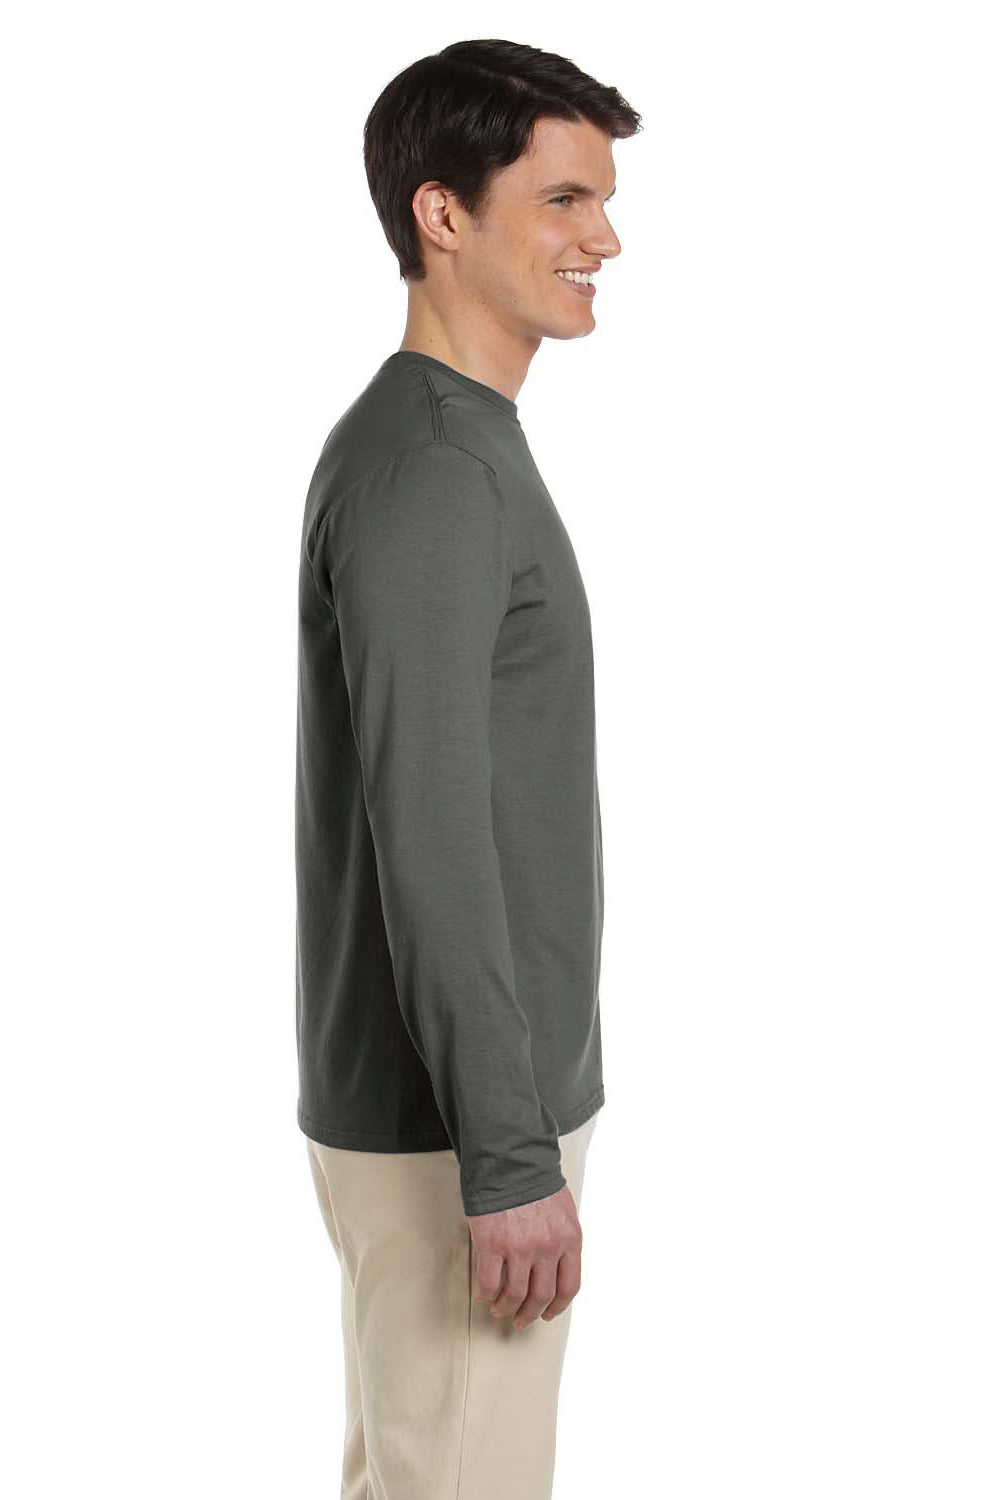 Gildan G644 Mens Softstyle Long Sleeve Crewneck T-Shirt Military Green Side